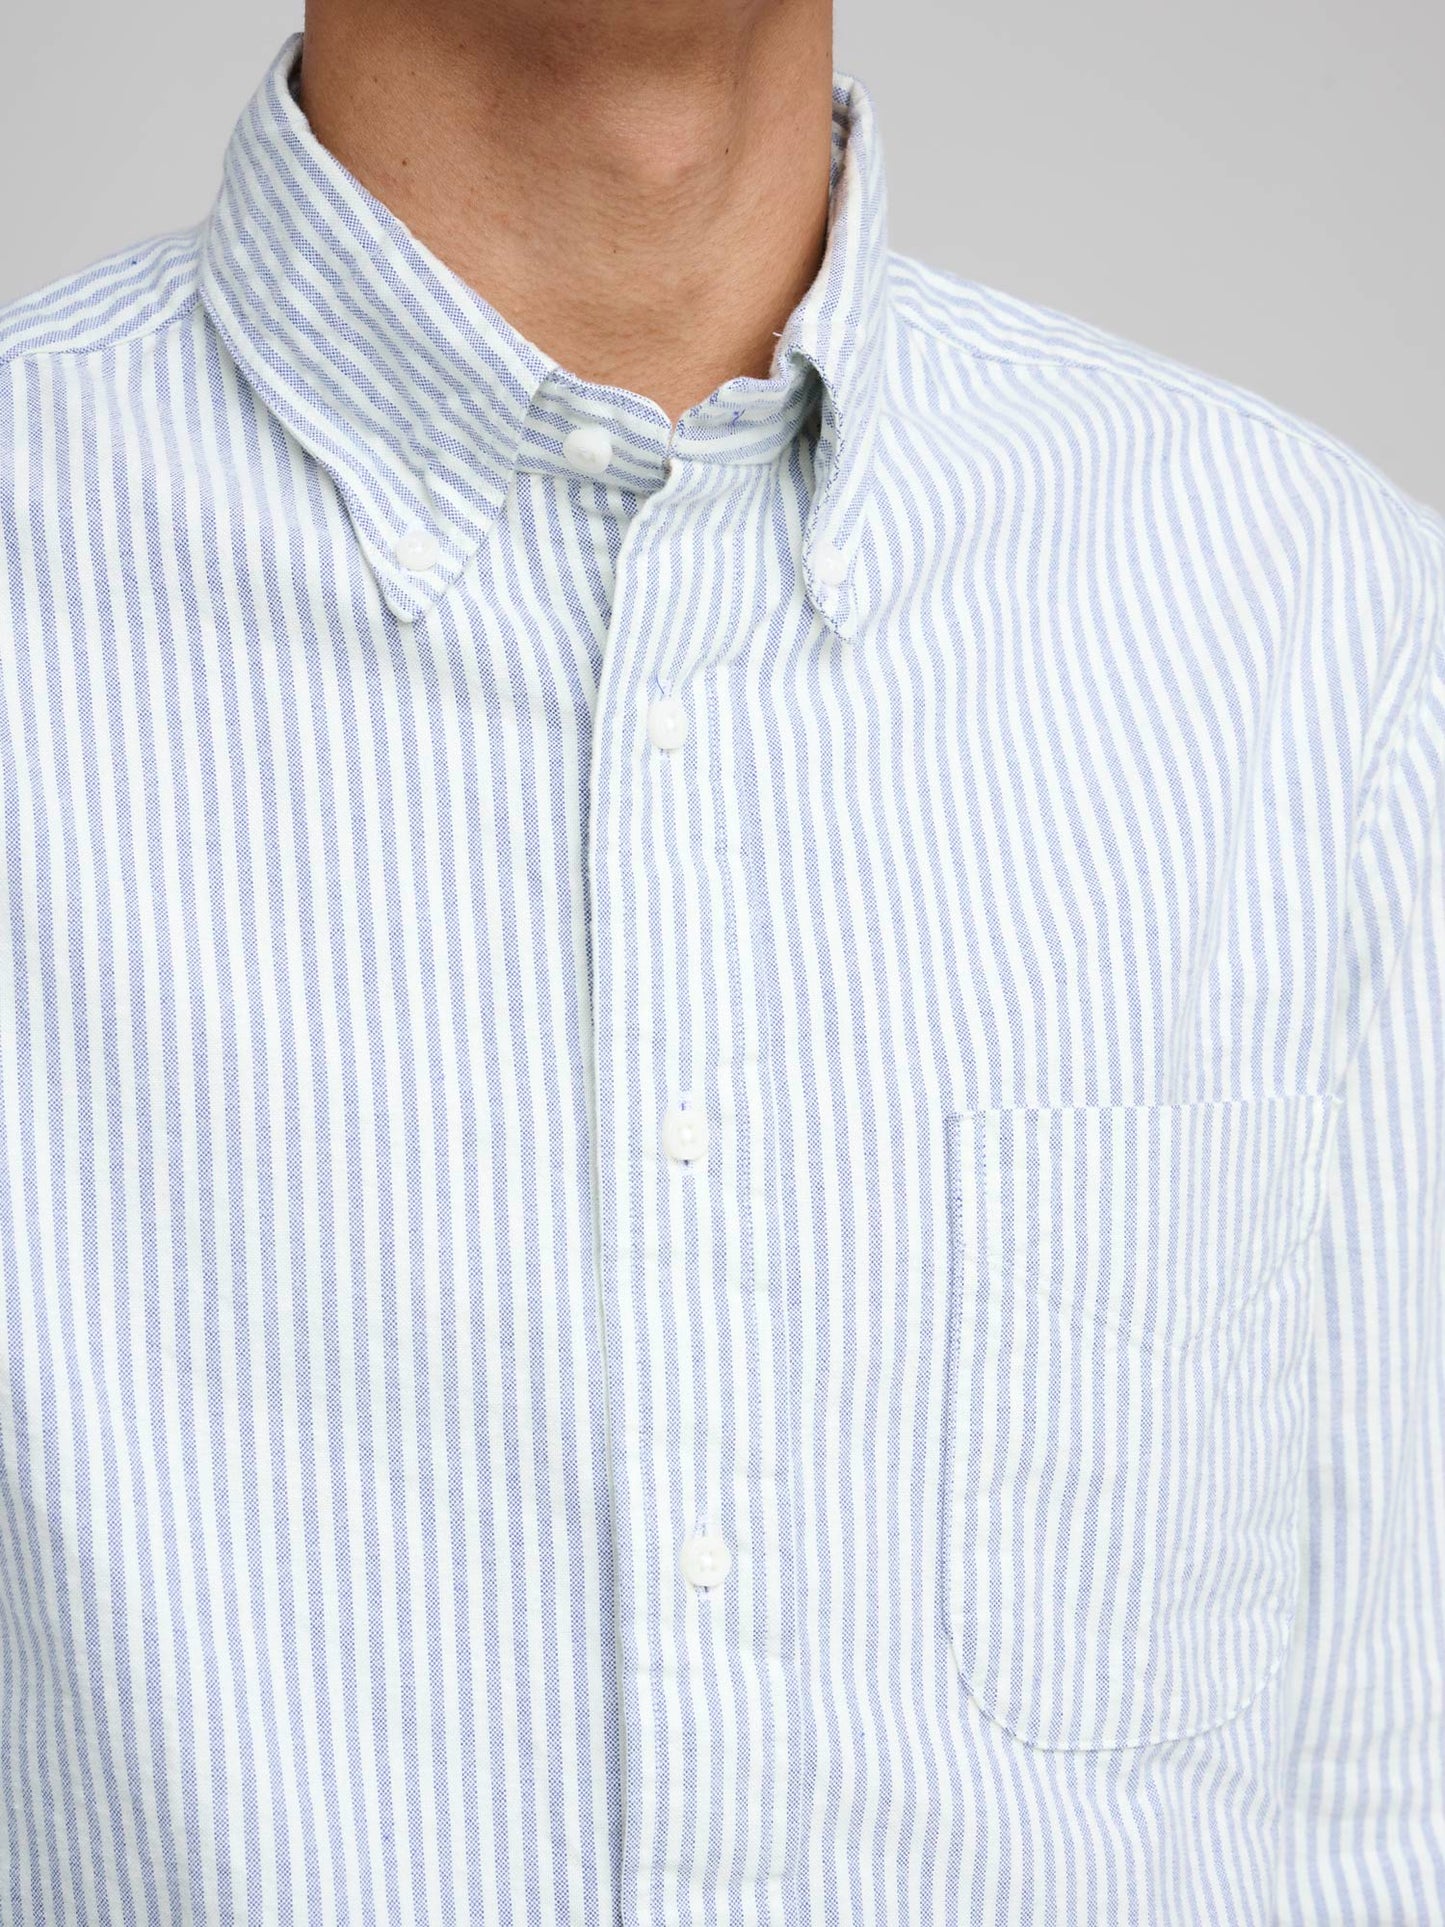 Brushed Oxford Shirt, Blue Stripe